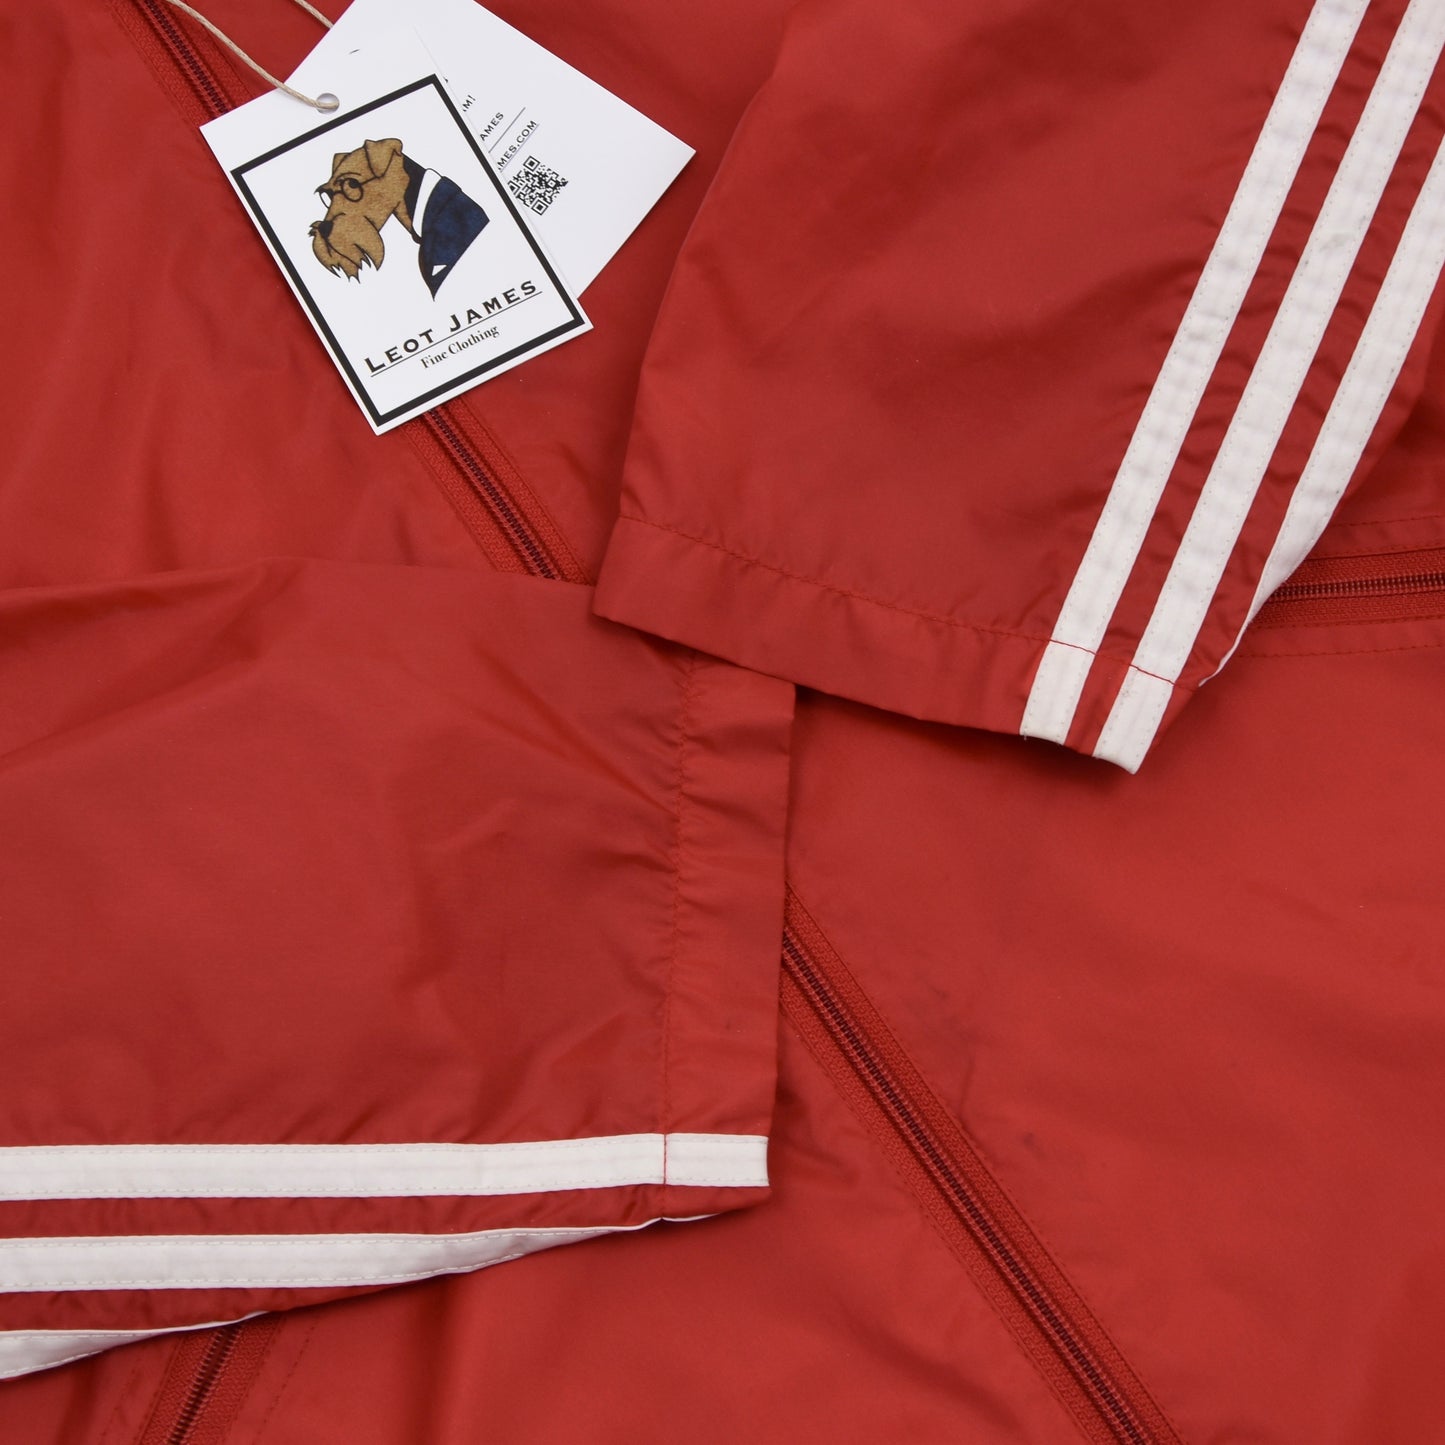 Vintage '80s Adidas Nylon Rain Jacket Size 52 - Red